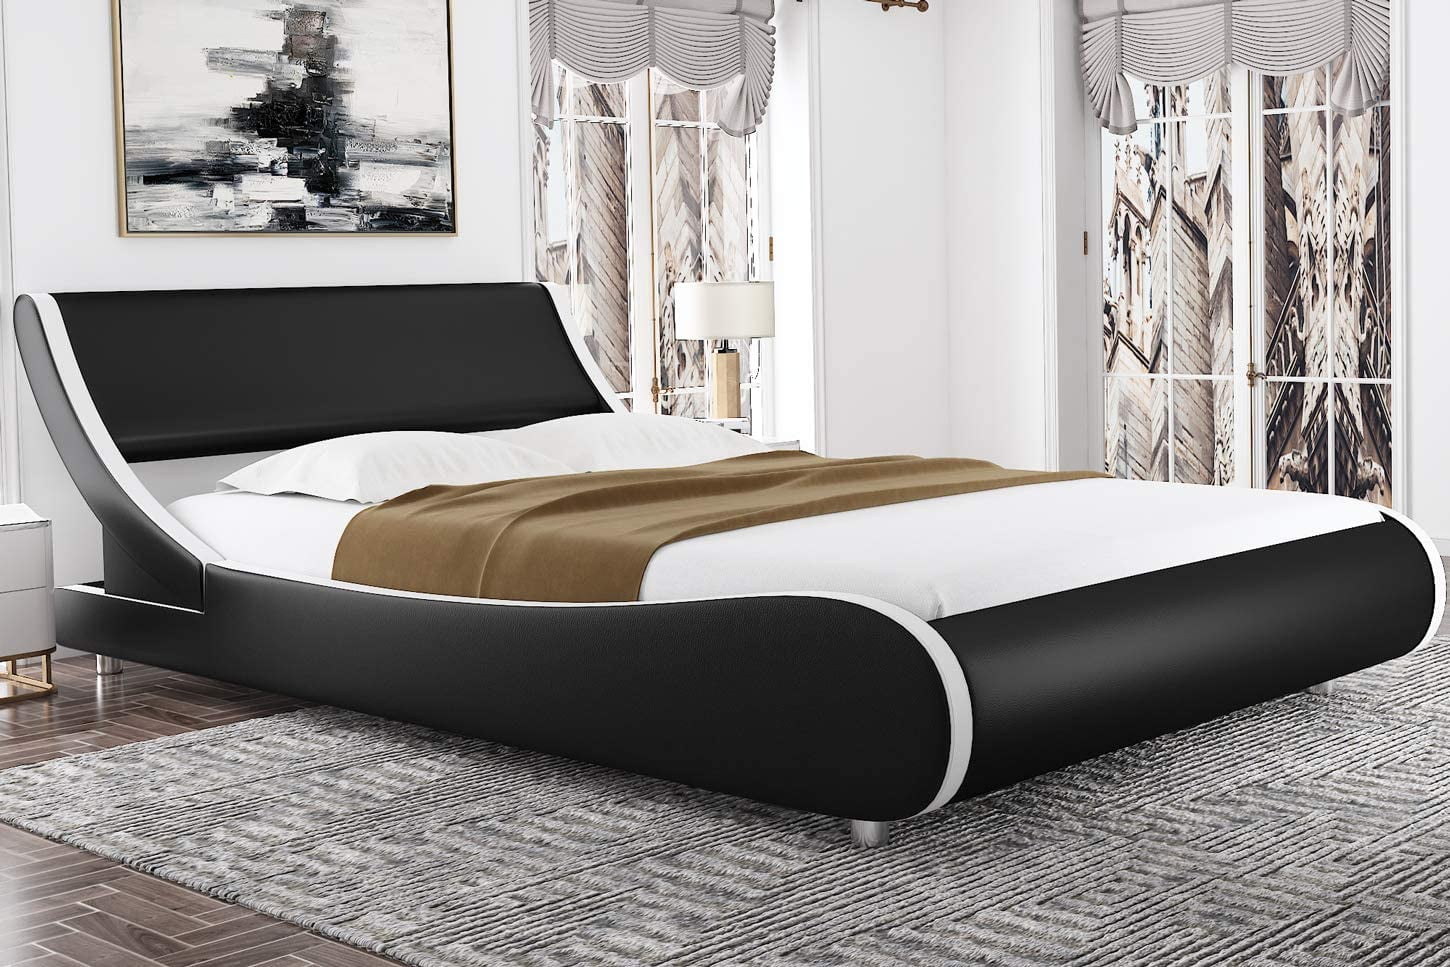 Amolife King Size Modern Platform Bed, Modern Sleigh Beds King Size